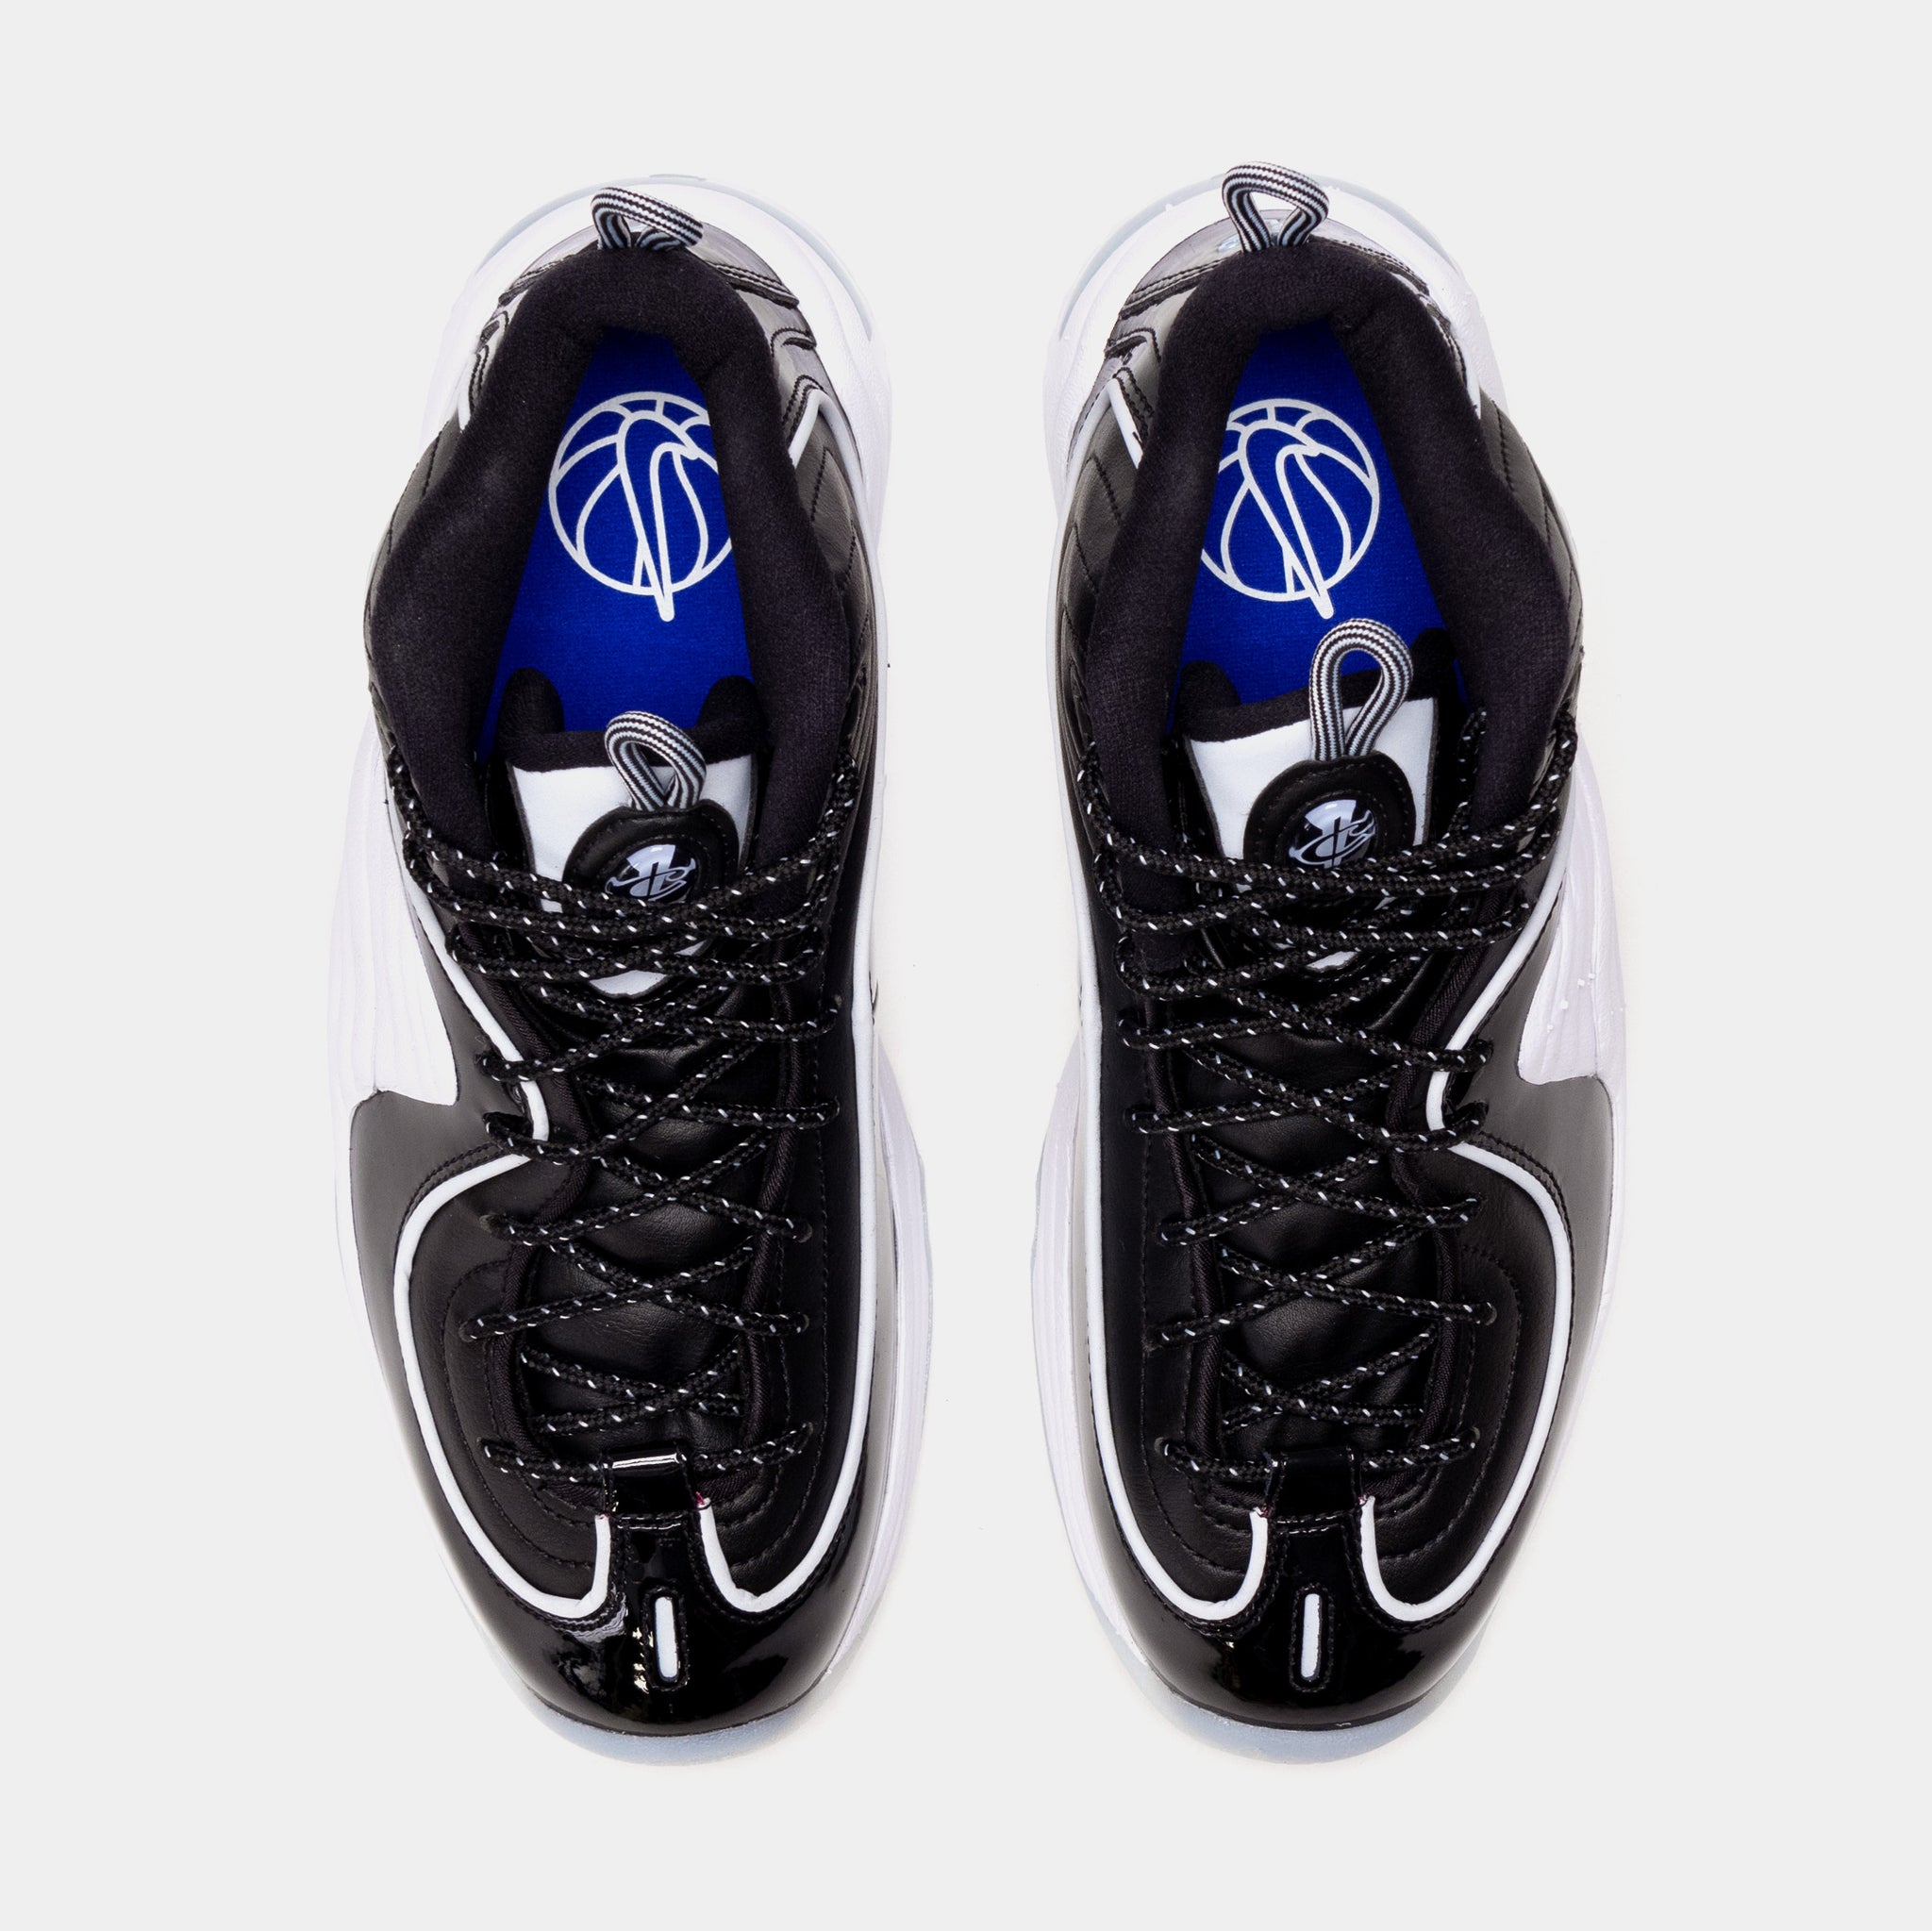 Nike Air Penny 2 Mens Basketball Shoes Black White Free Shipping 